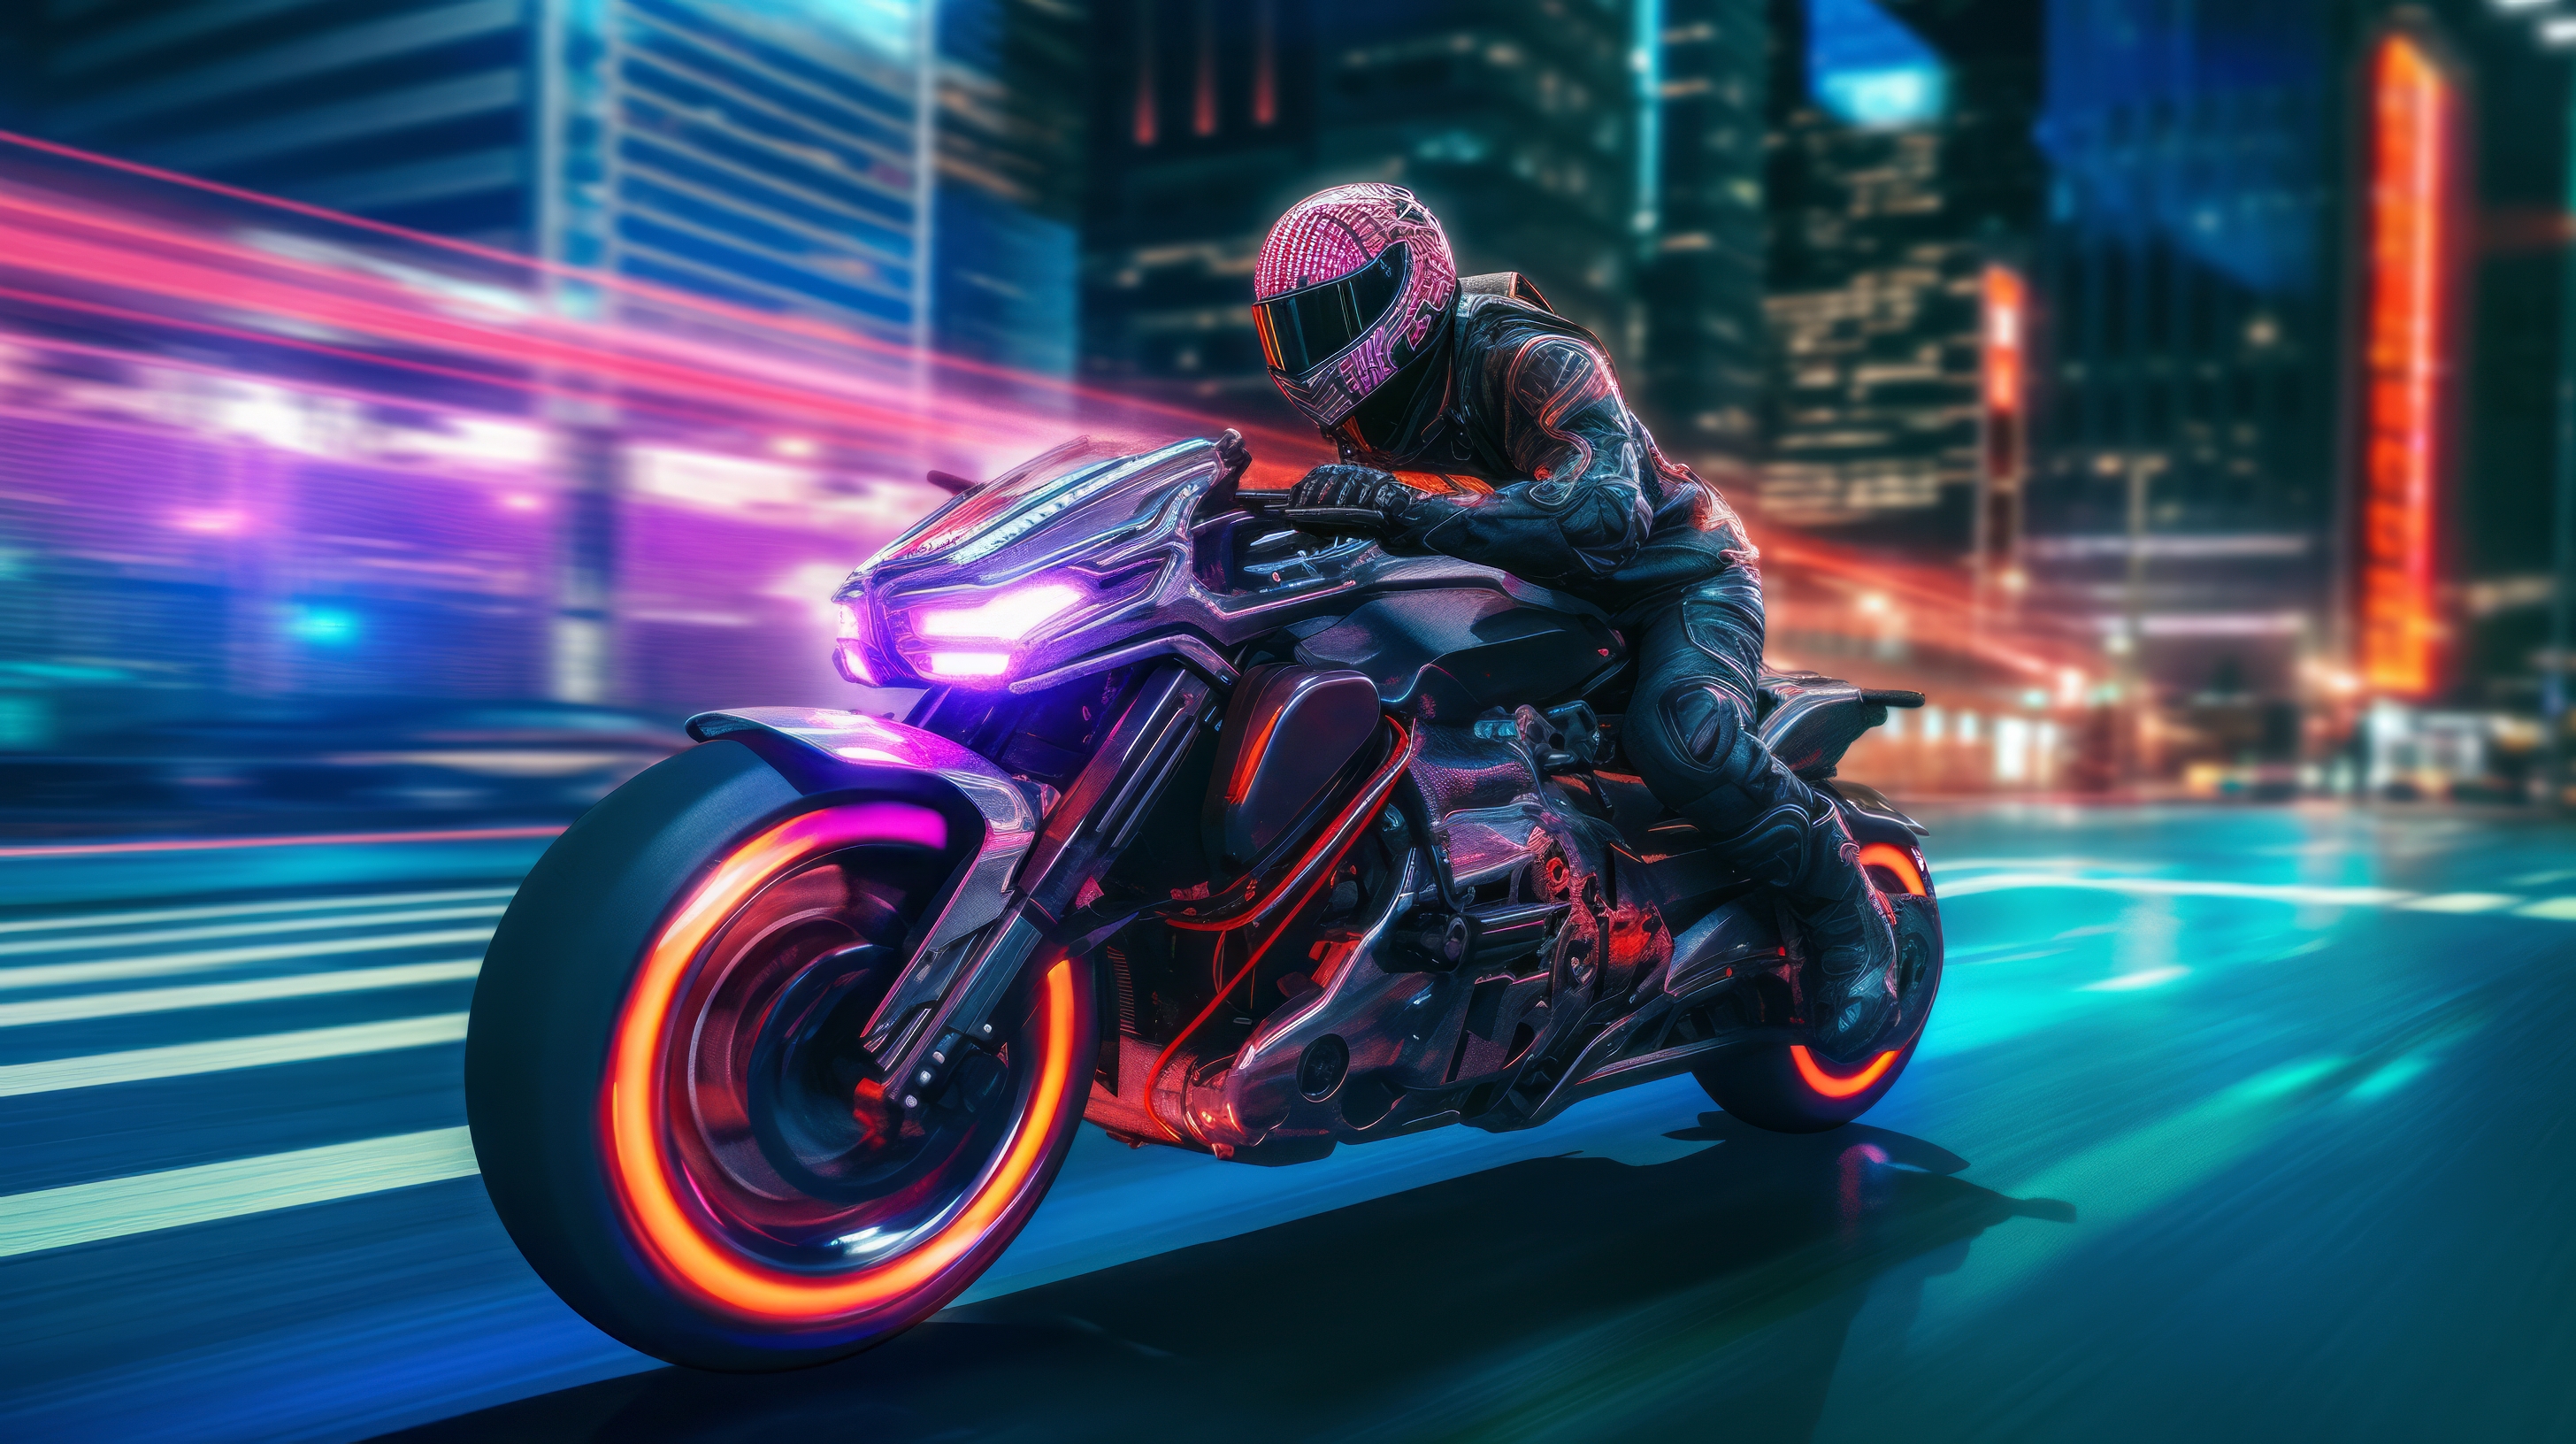 General 2912x1632 AI art cyberpunk motorcycle neon street Tron blurred blurry background vehicle helmet headlights